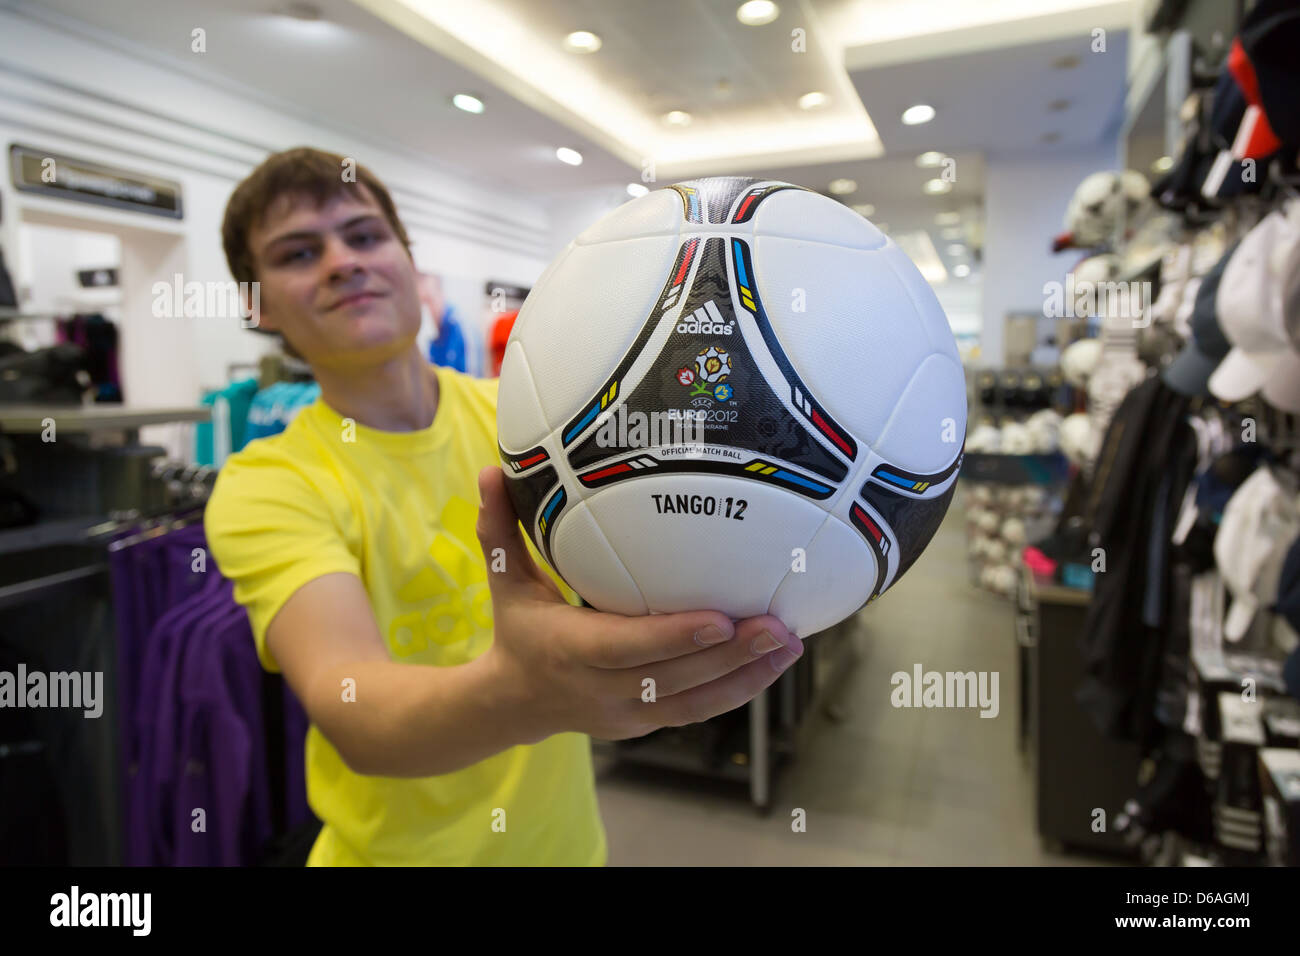 Lviv, Ukraine, a Dealer adidas shops with the official tournament ball of UEFA EURO 2012, the adidas Tango 12 Stock Photo